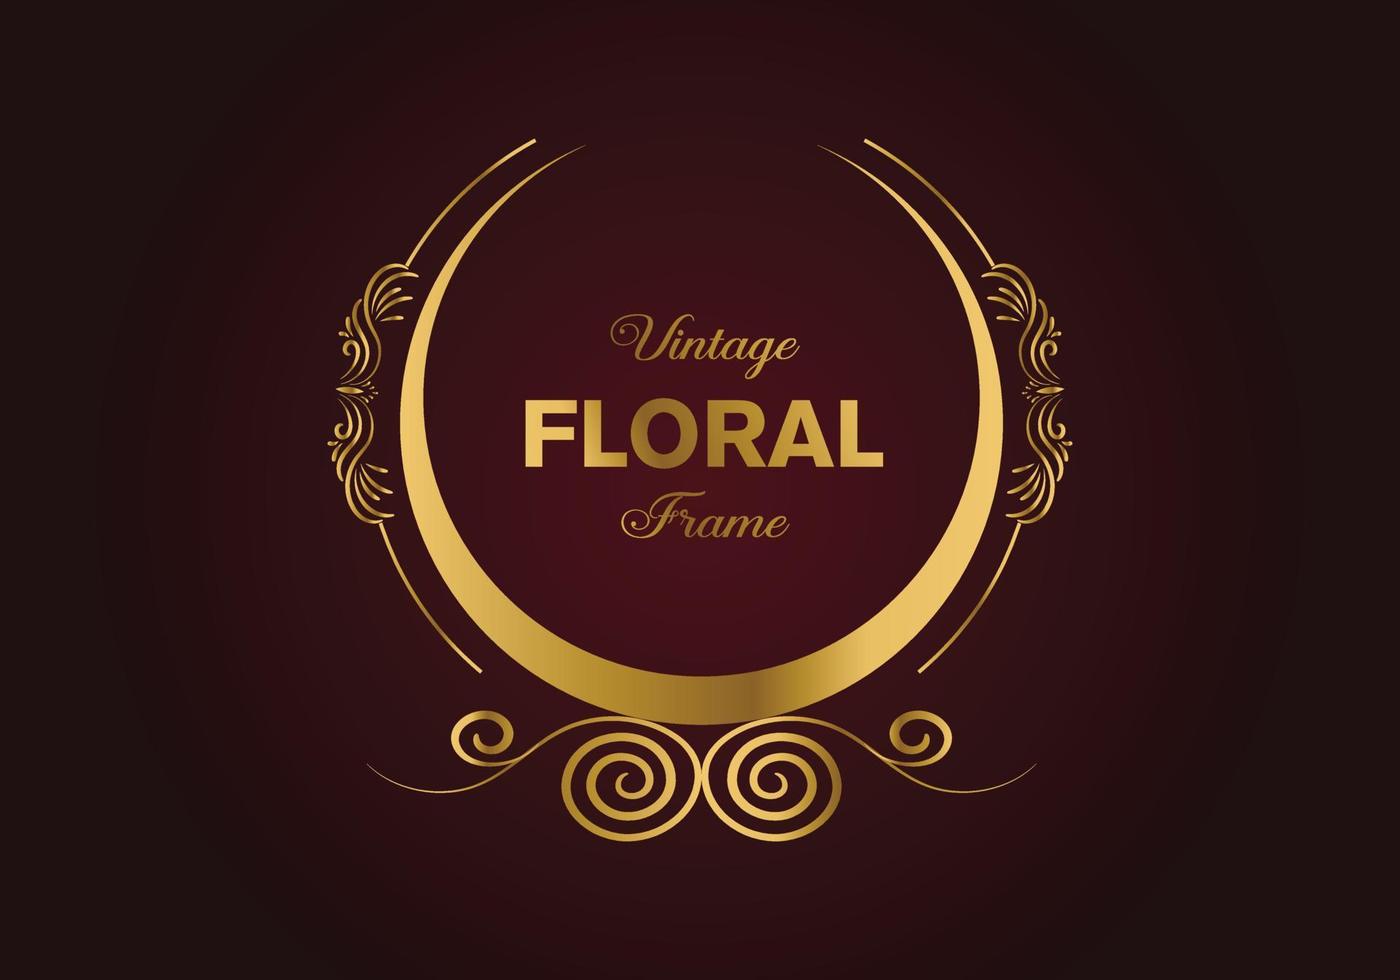 Beautiful circular golden floral stylish frame design. Free Iillustration. vector